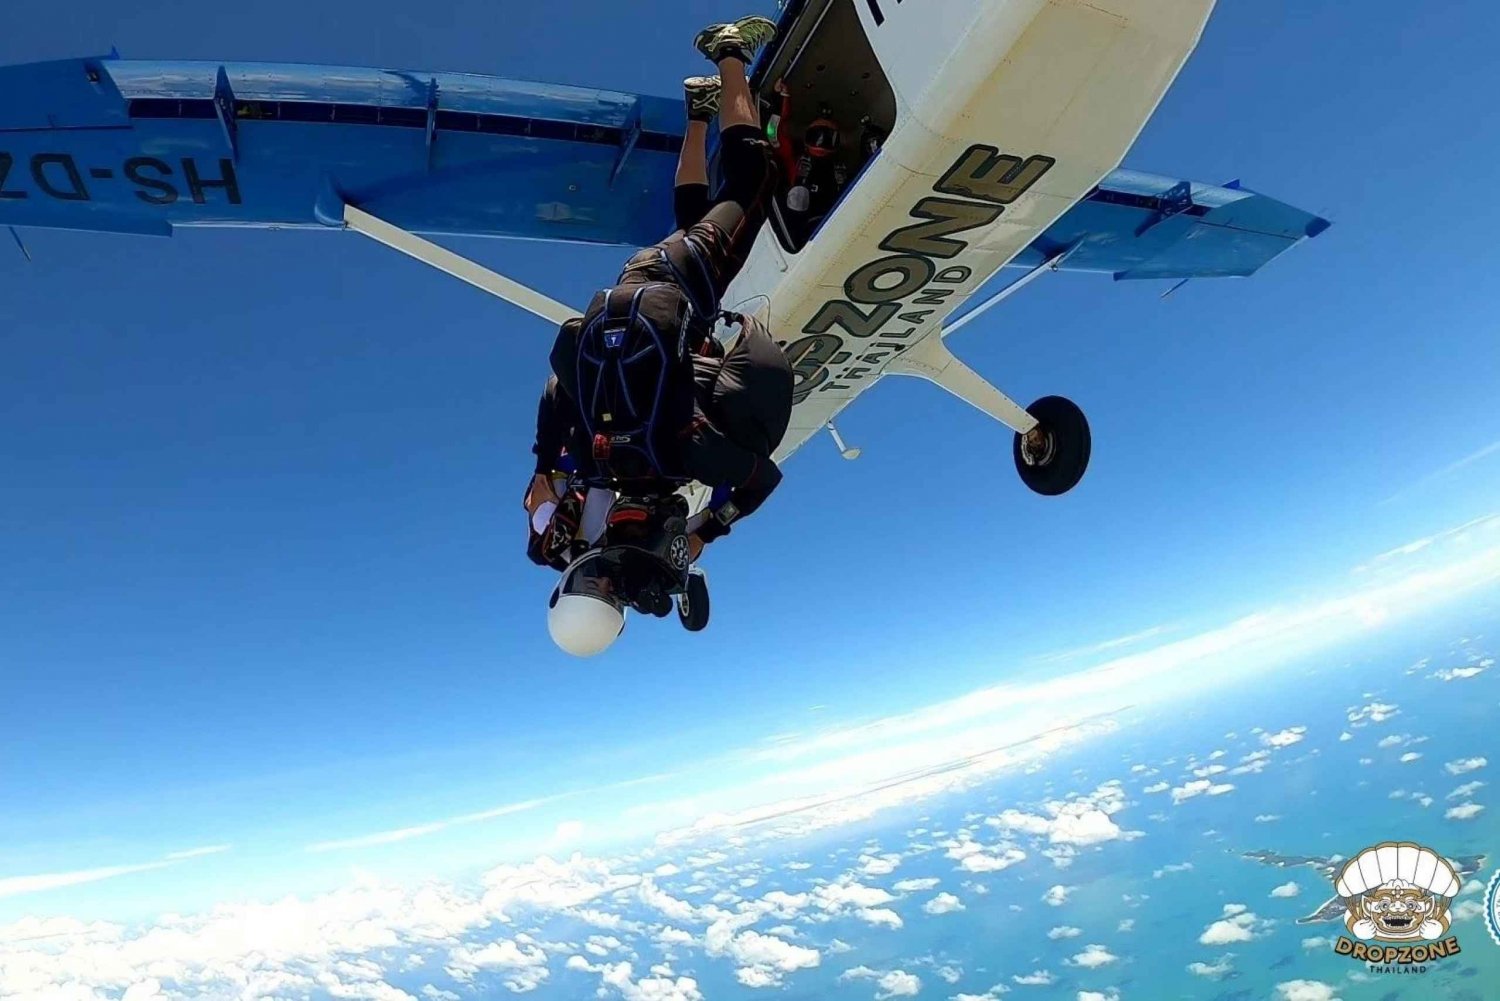 Pattaya: Dropzone Tandem Skydive Experience com vista para o mar